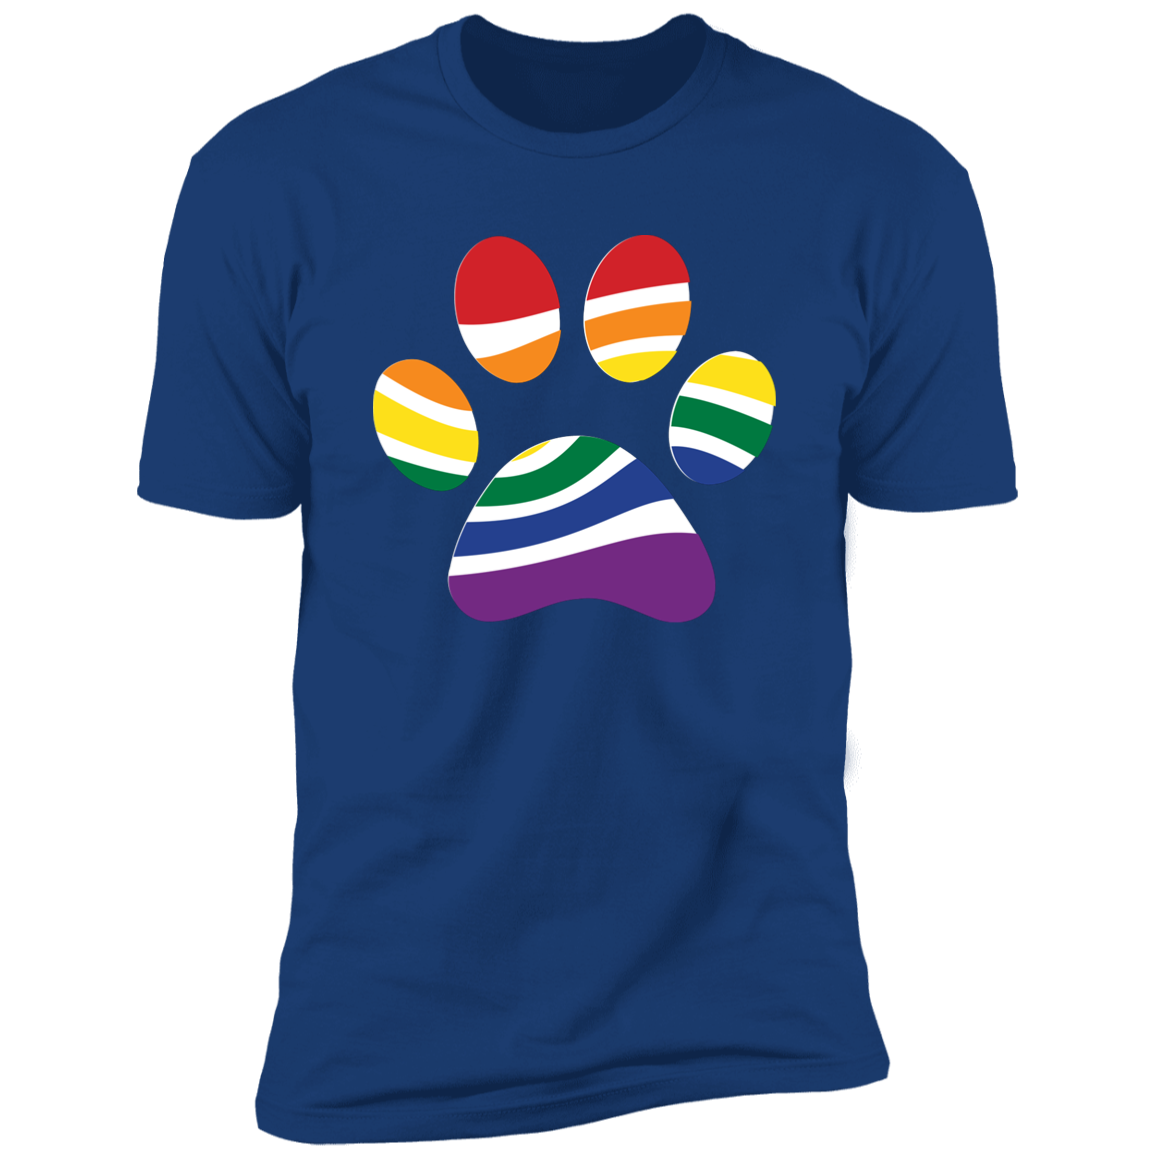 Pride Paw (Retro) Pride T-shirt, Paw Pride Dog Shirt for humans, in royal blue